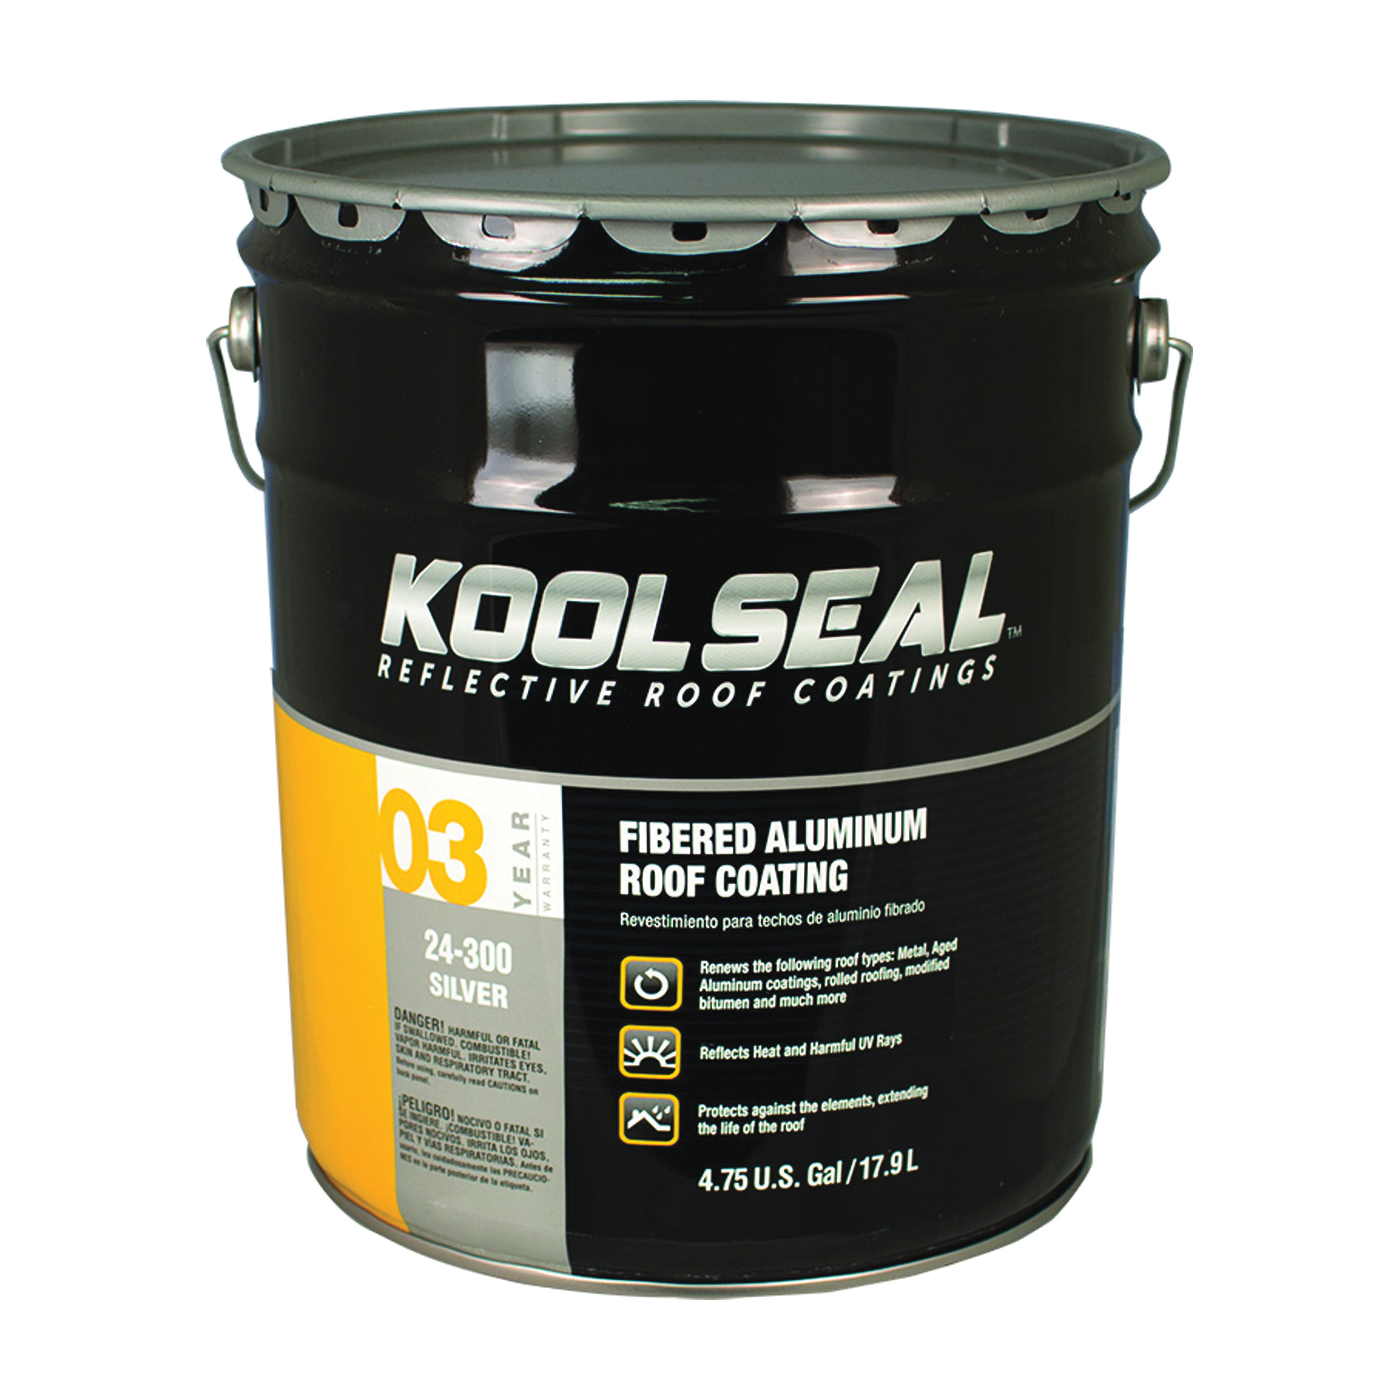 KS0024300-20 Roof Coating, Silver, 5 gal Pail, Liquid